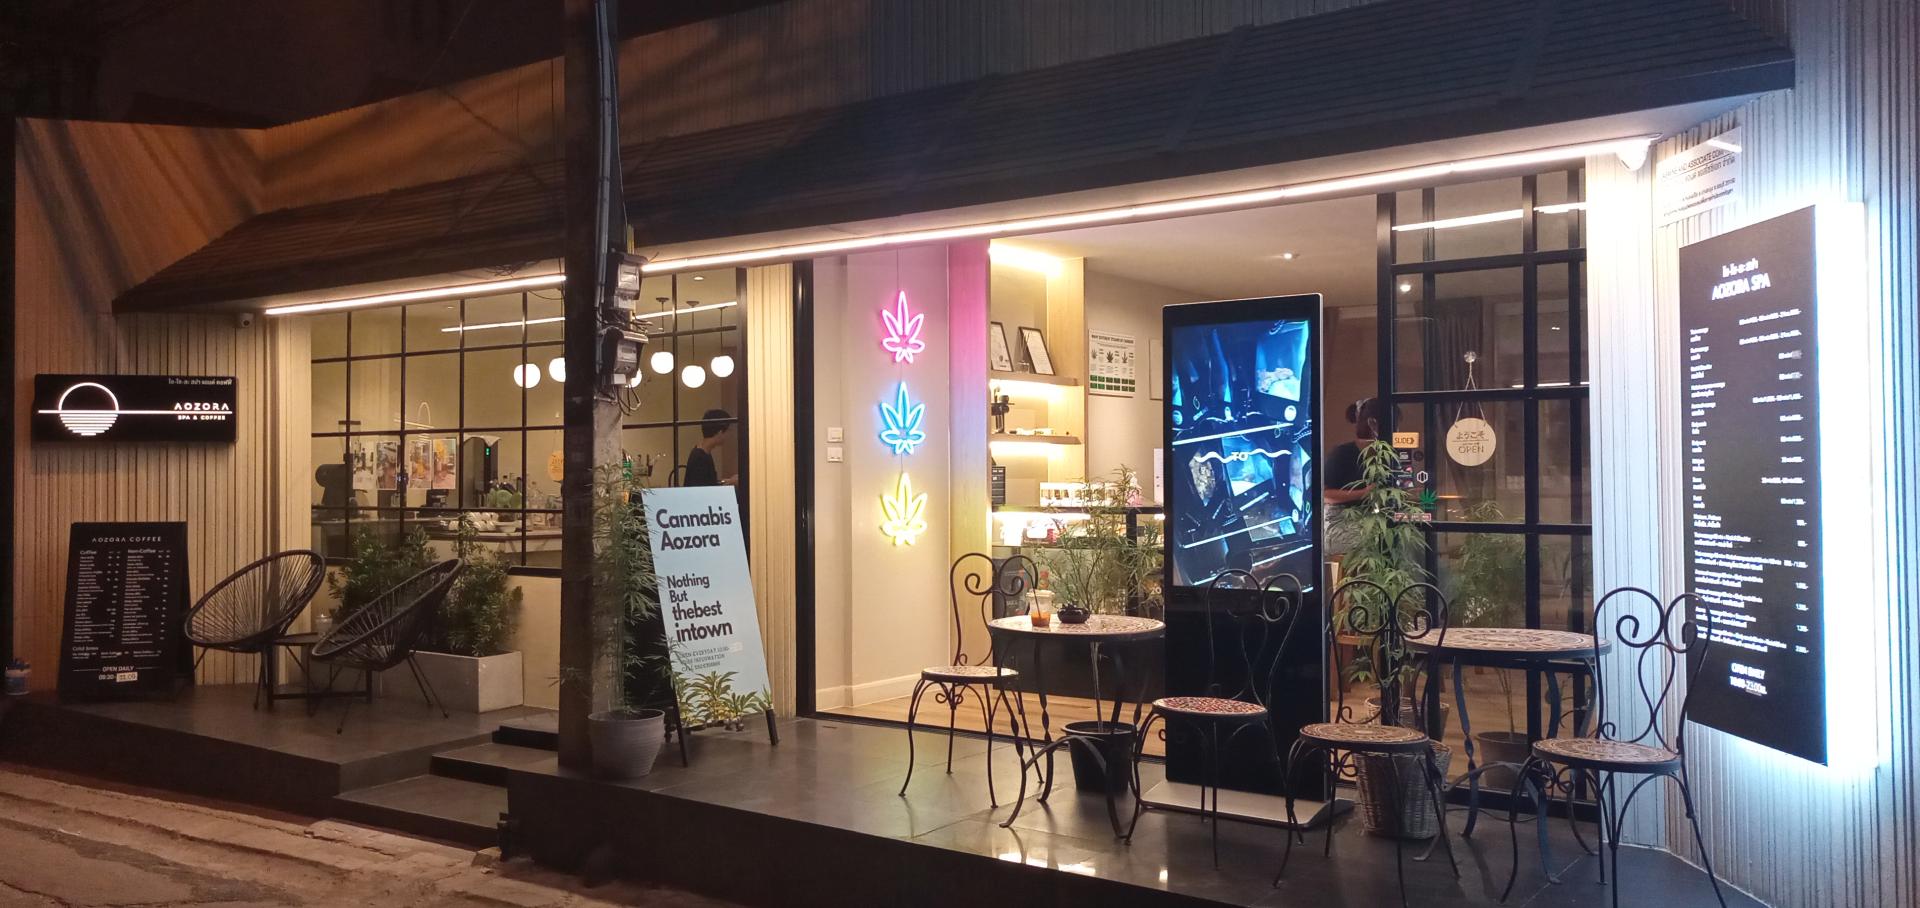 Aozora Bar, Café and Spa, Soi 12 Pattaya